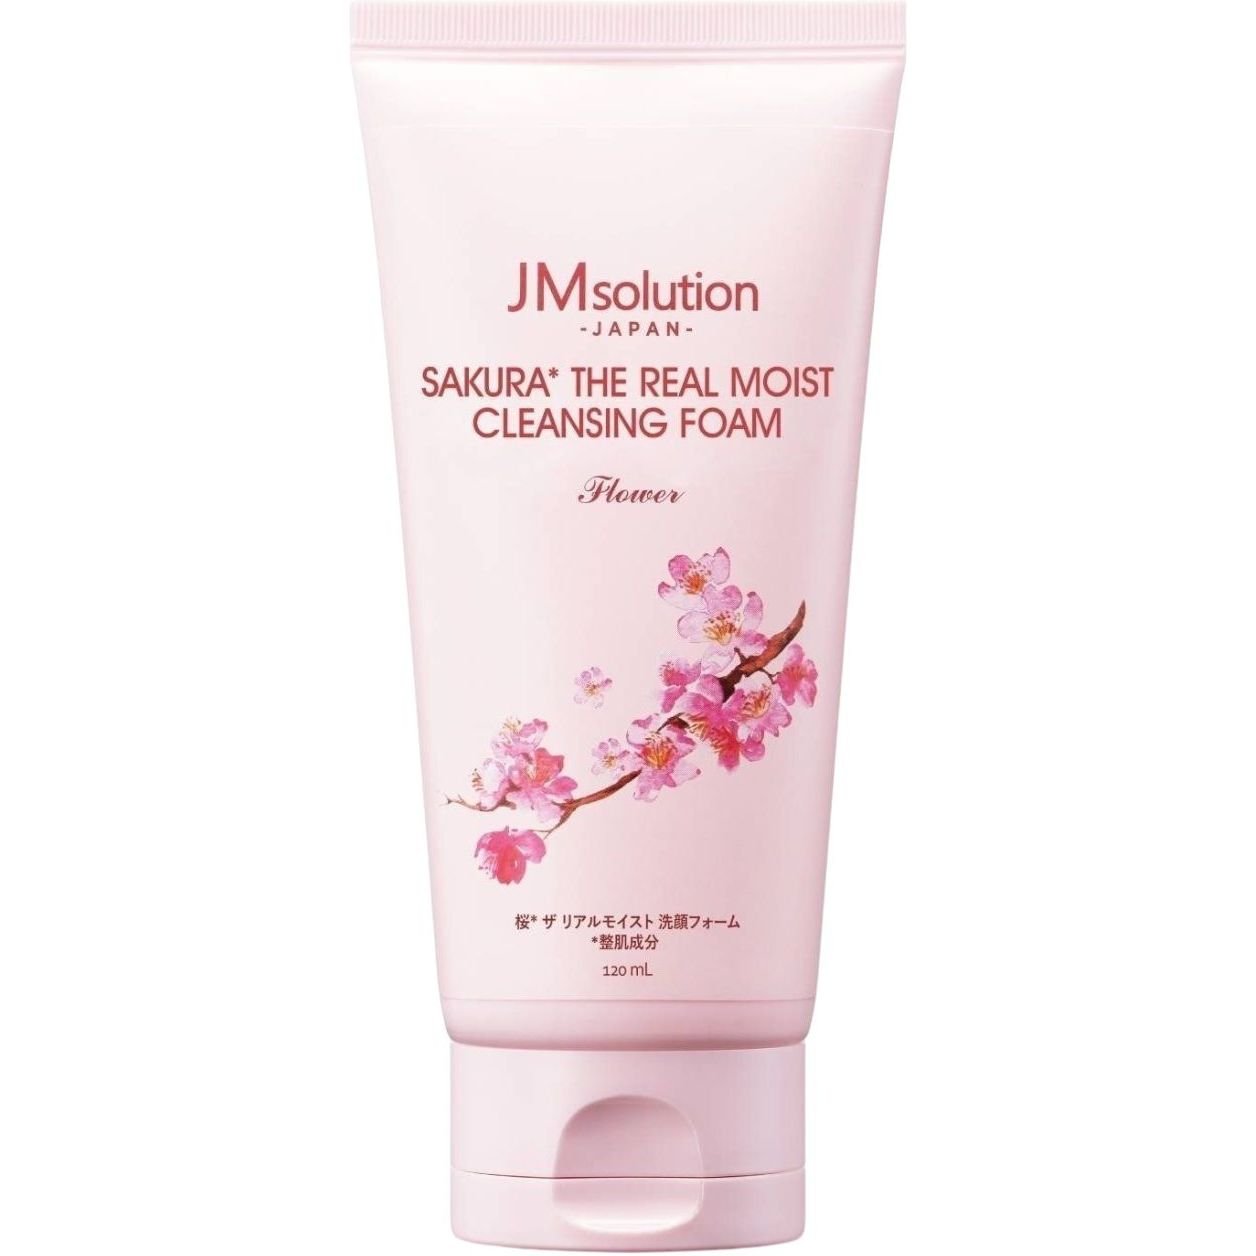 Очищуюча піна JMsolution Sakura The Real Moist Cleansing Foam, 120 мл - фото 1